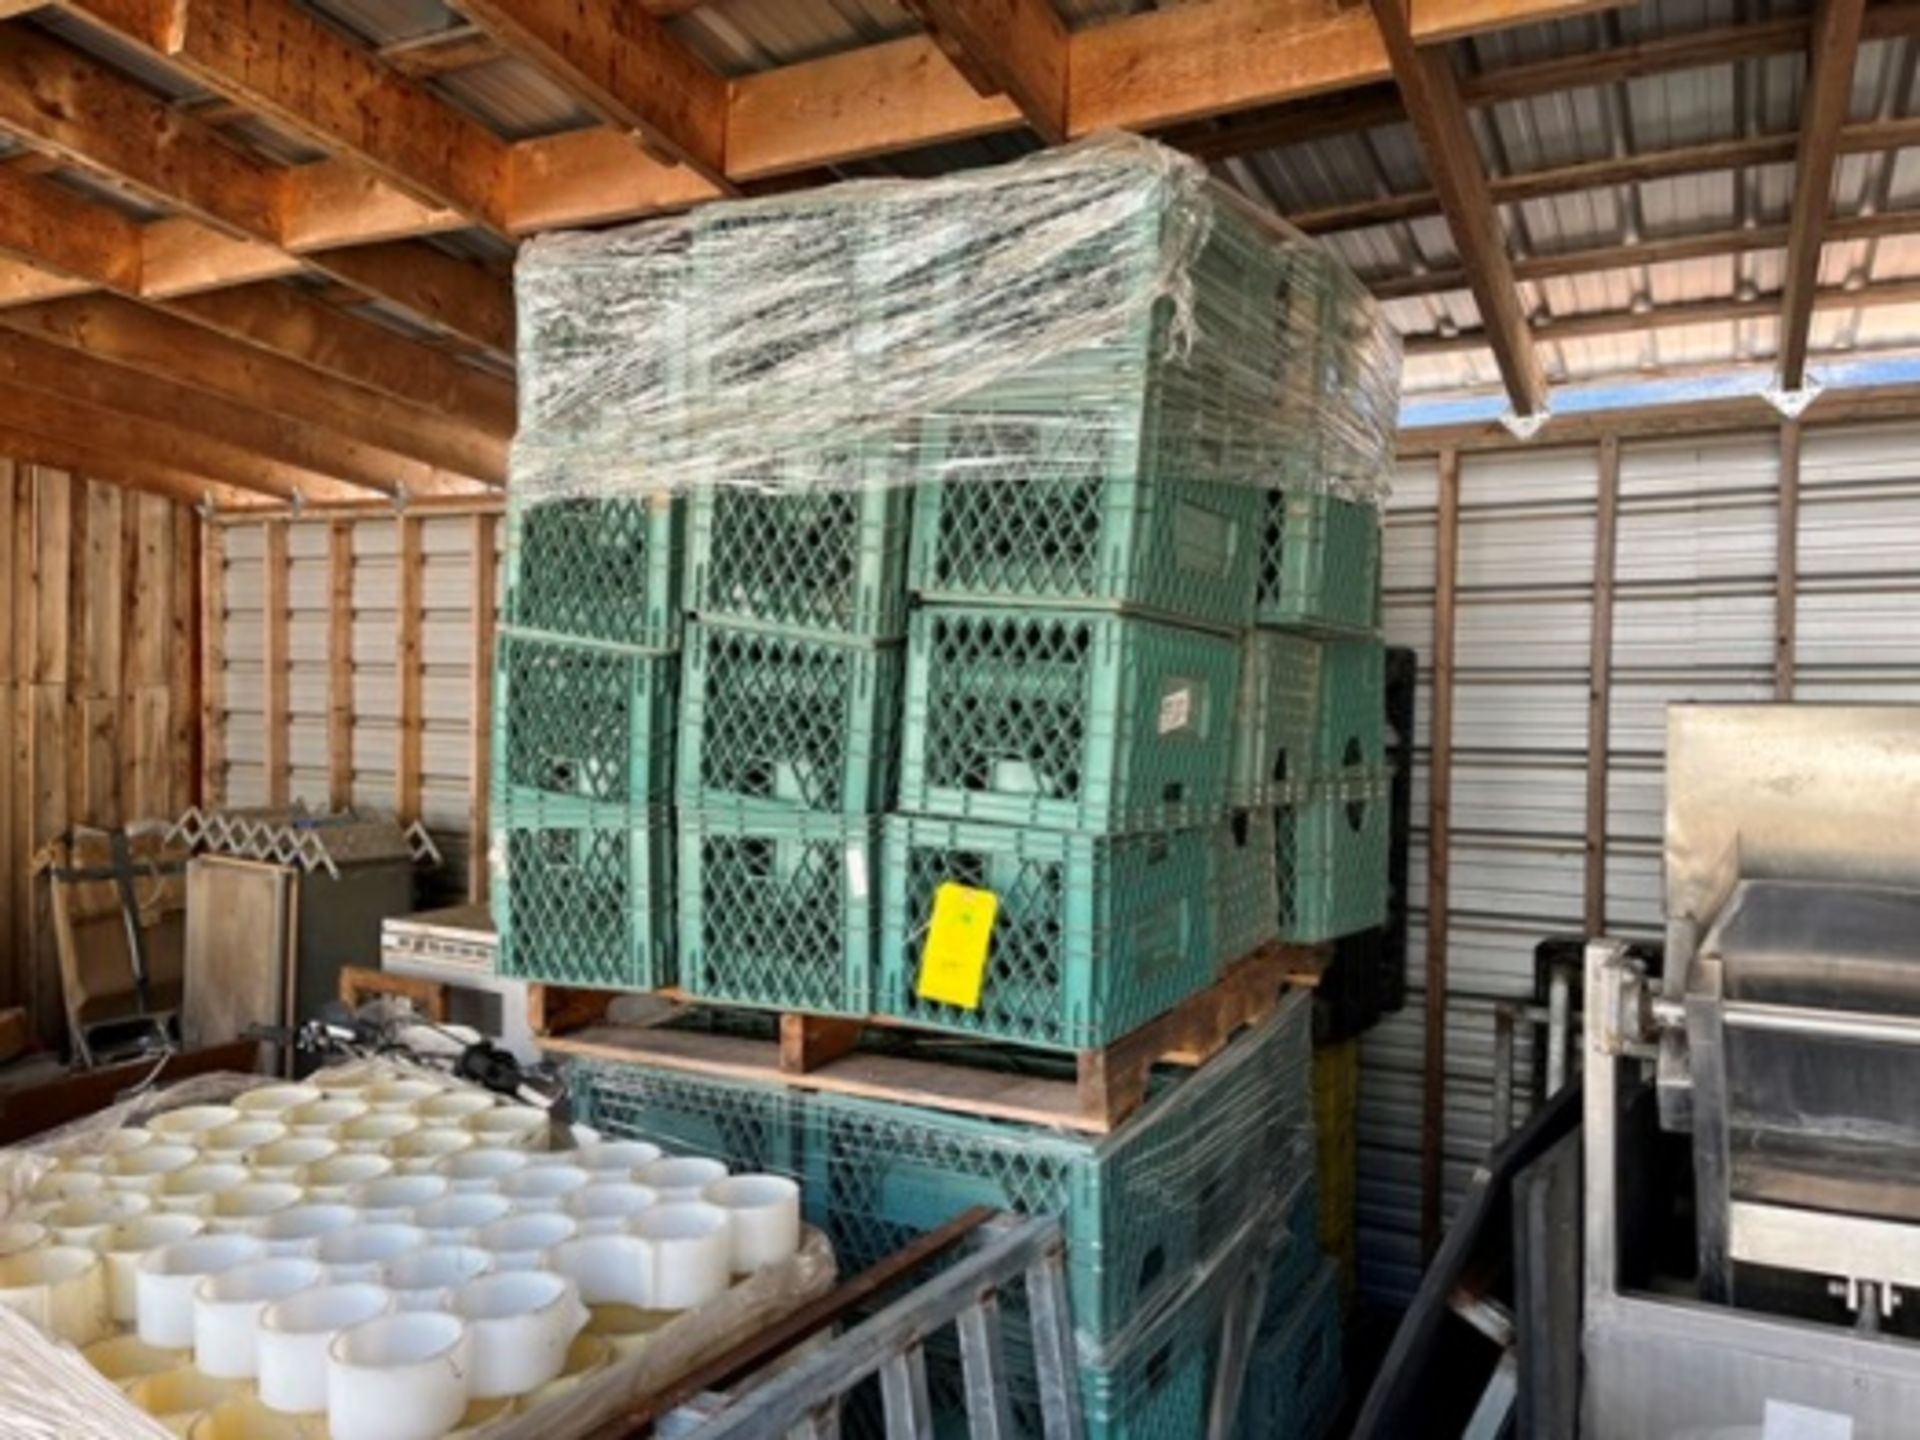 Large milk crates, Qty. 168